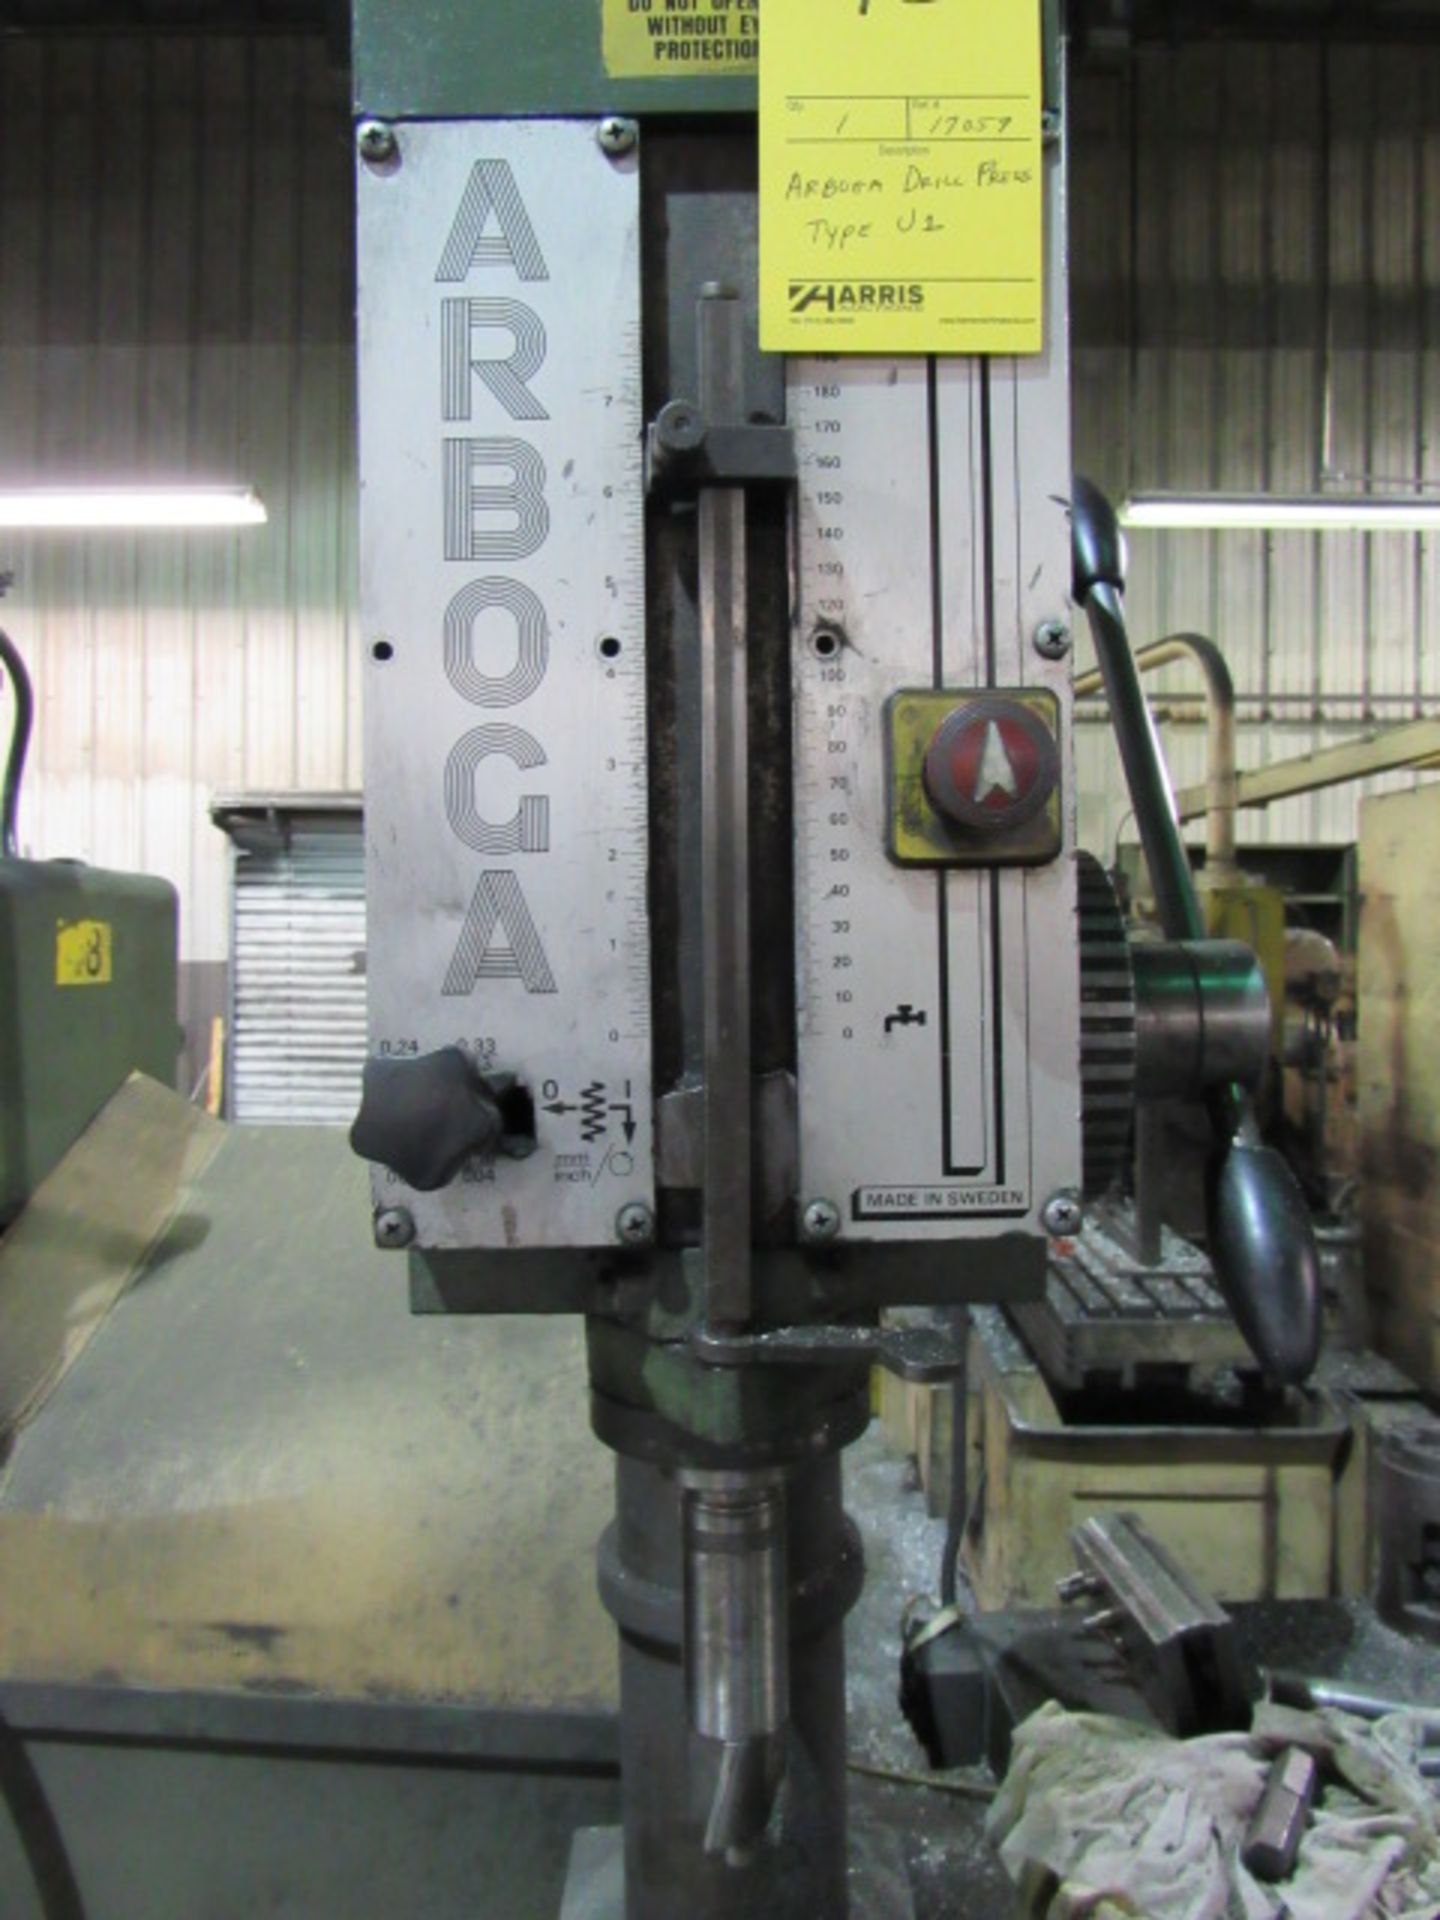 Arboga Drill Press Type U-1 - Image 4 of 6